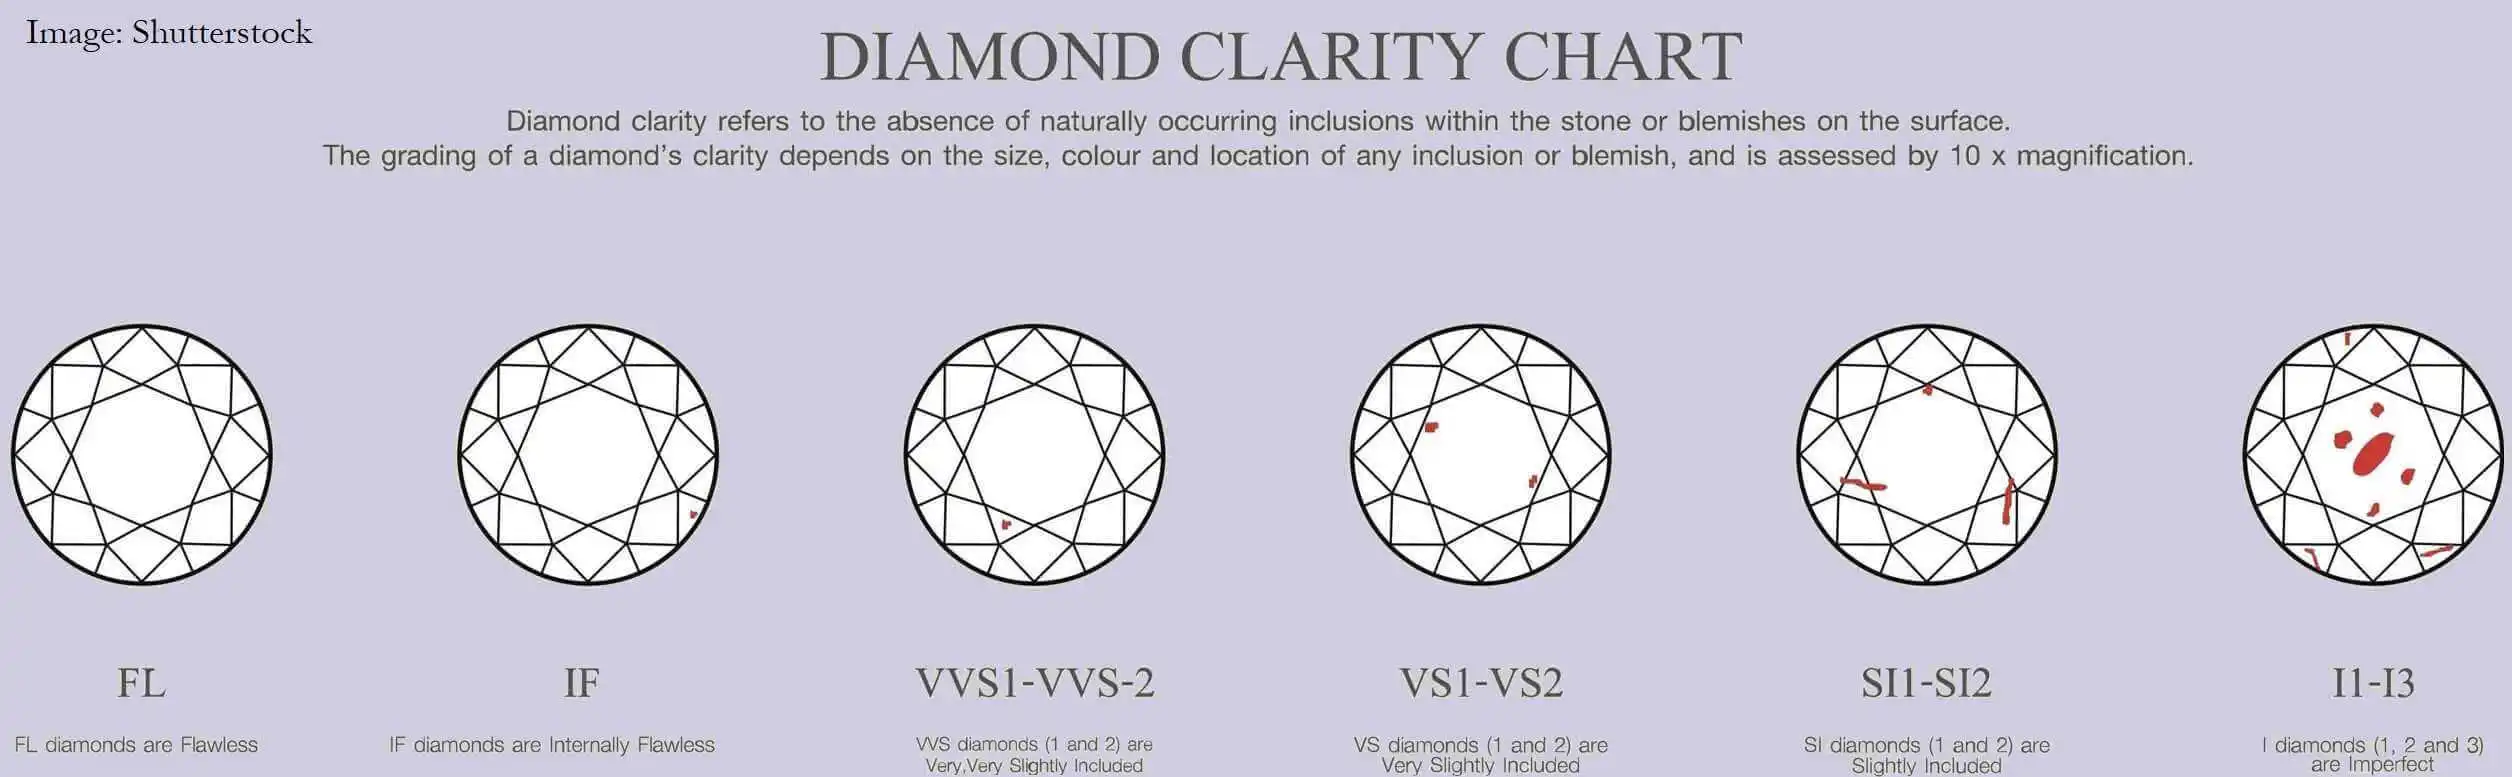 diamond clarity chart